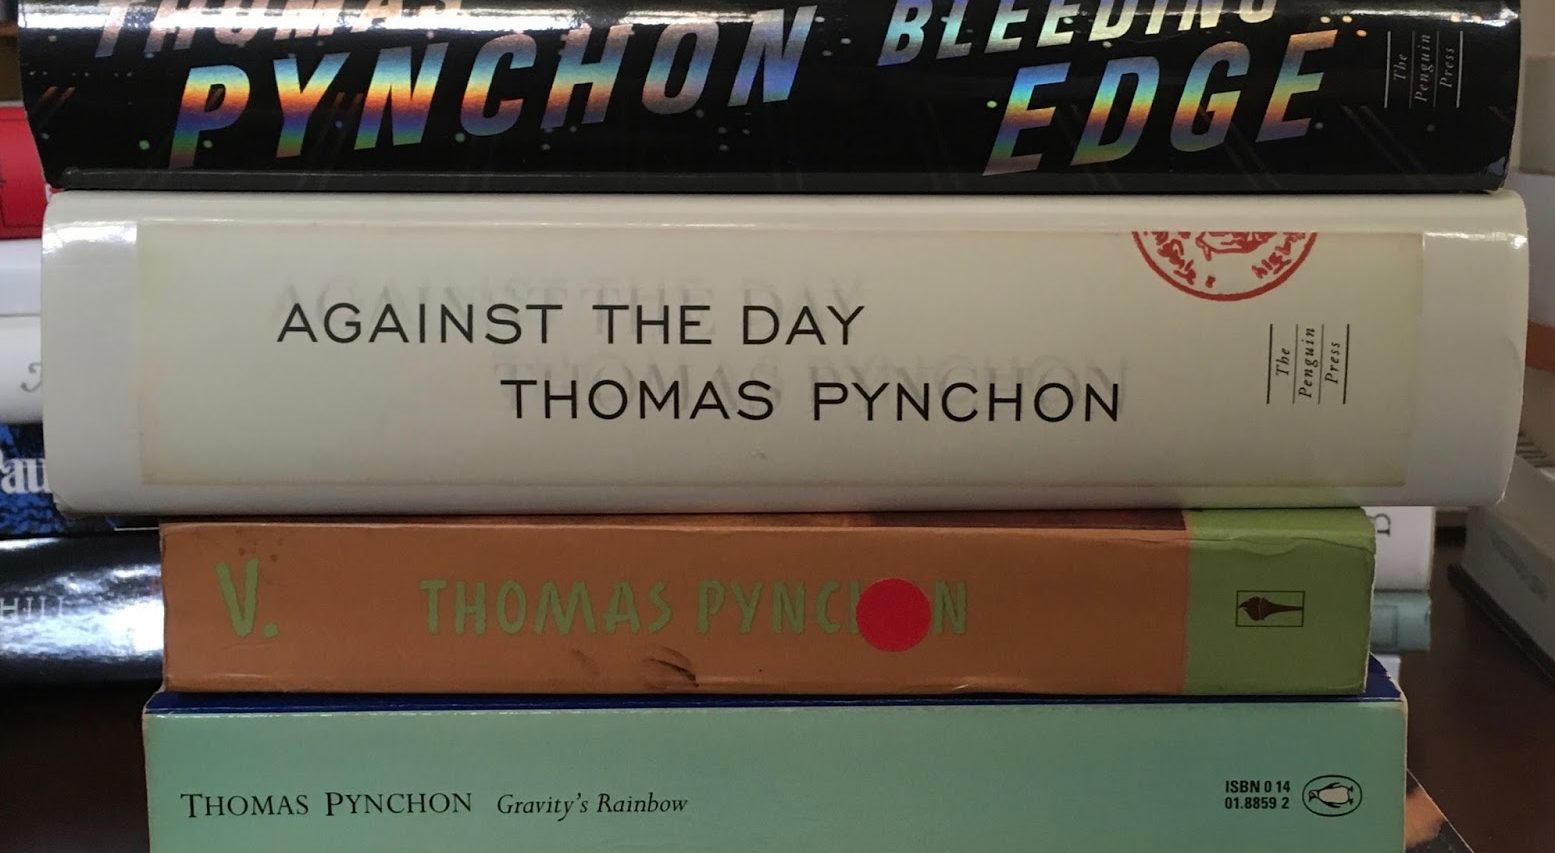 does Pynchon write good novels?